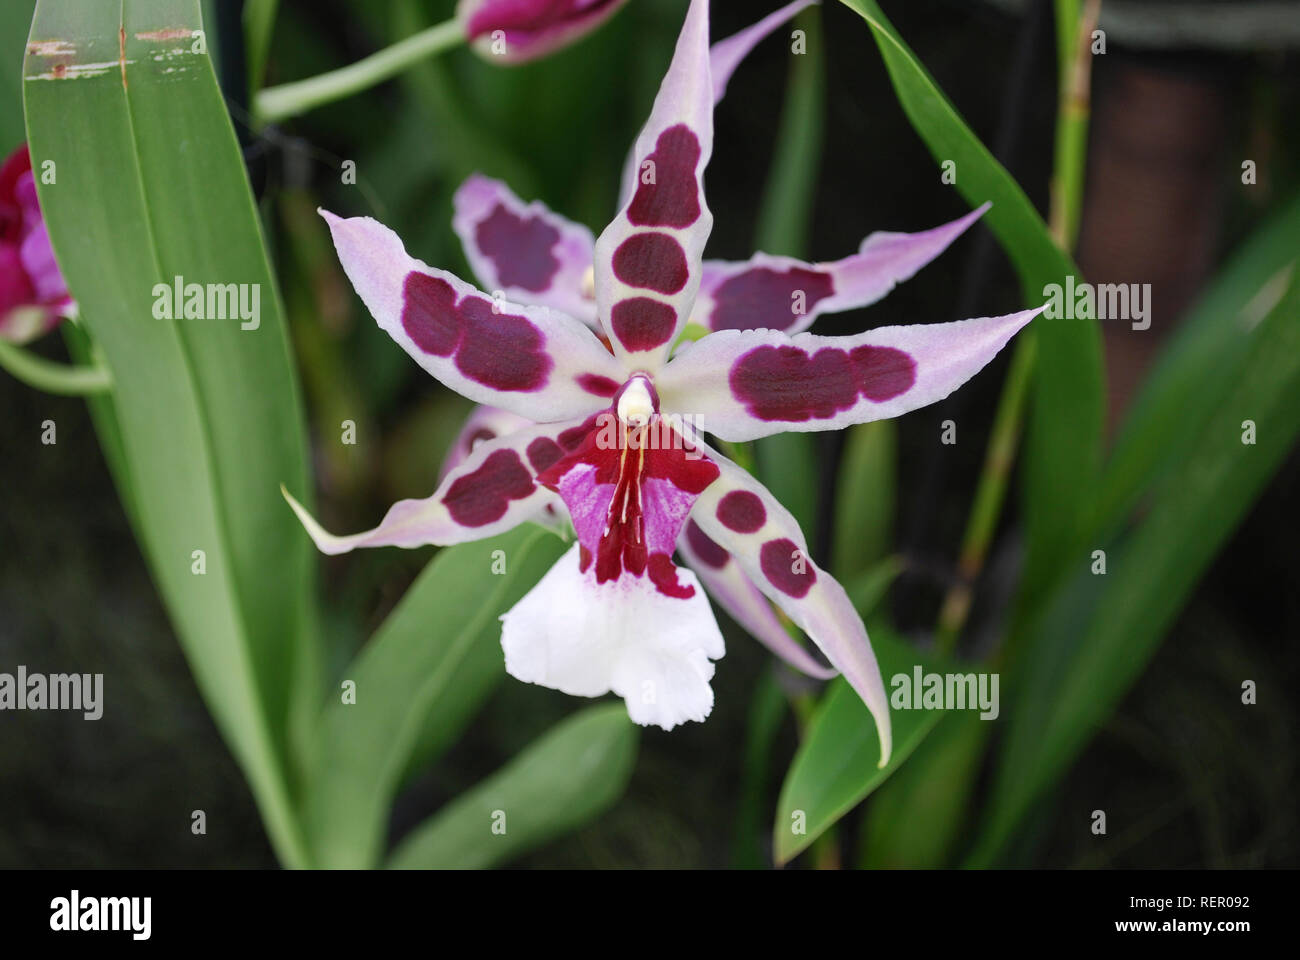 Aliceara (Beallara) Peggy Ruth Carpenter Morning Joy Orchid flower. Stock Photo